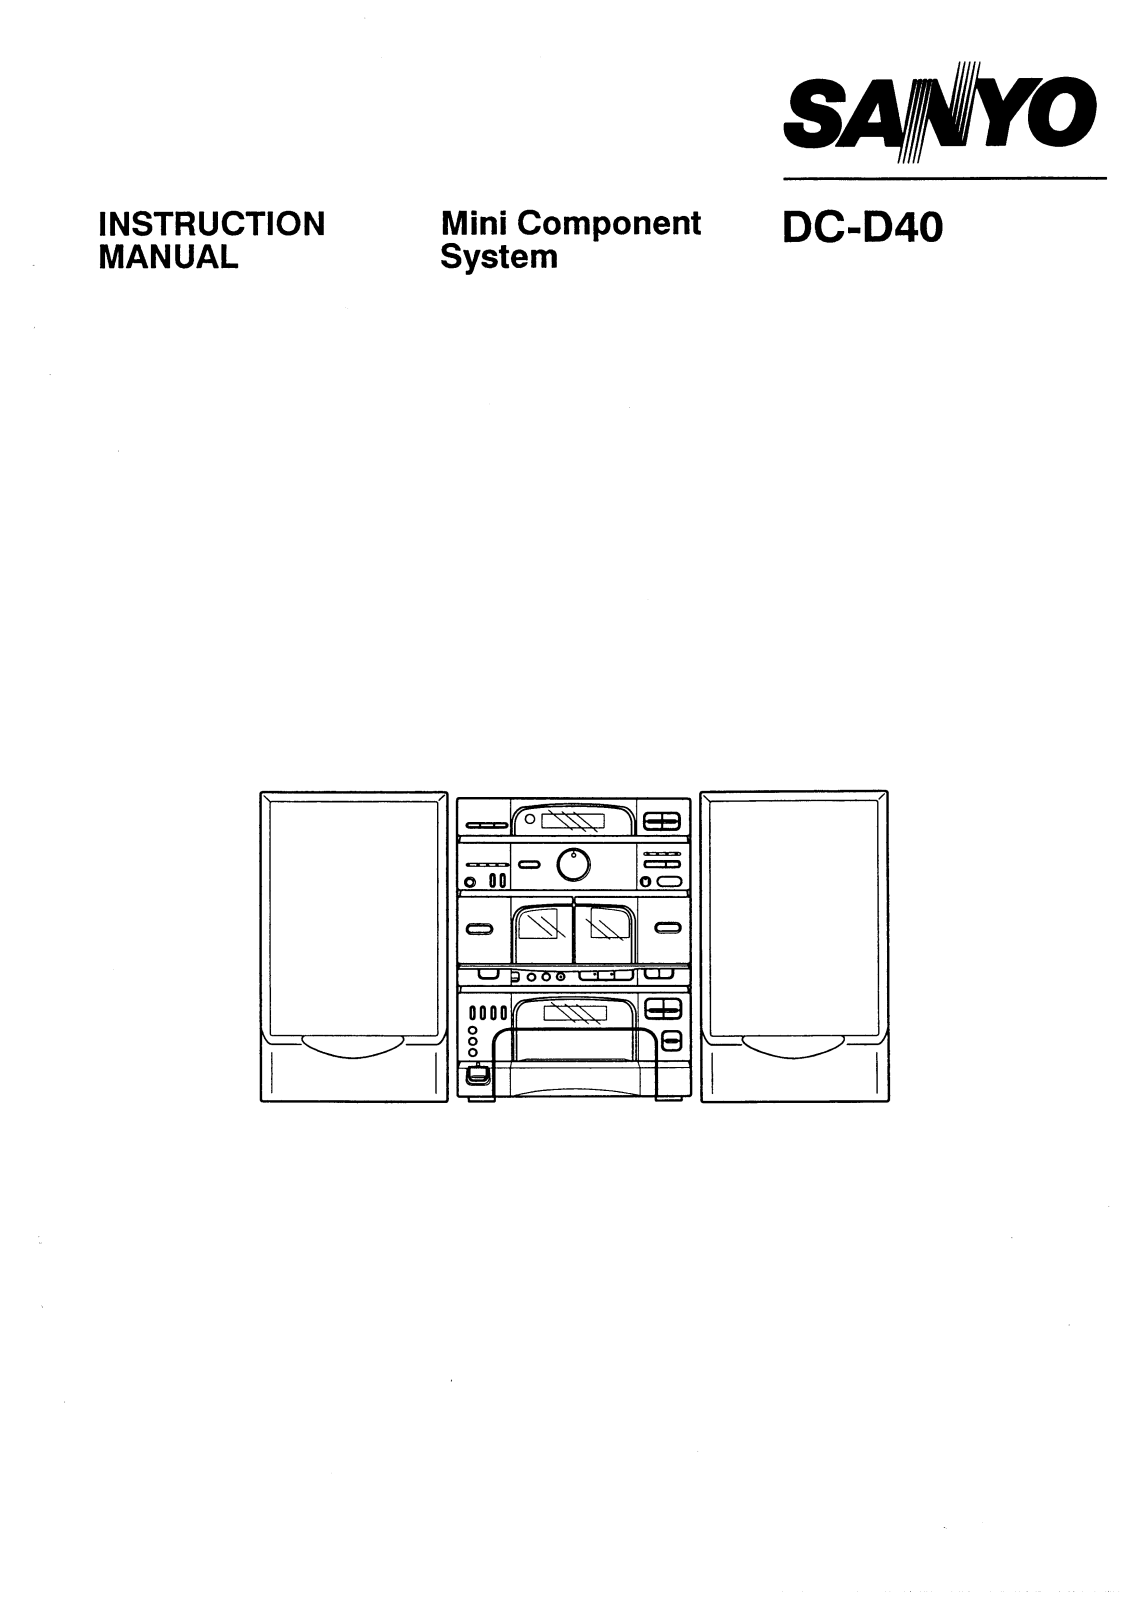 Sanyo DC-D40 Instruction Manual